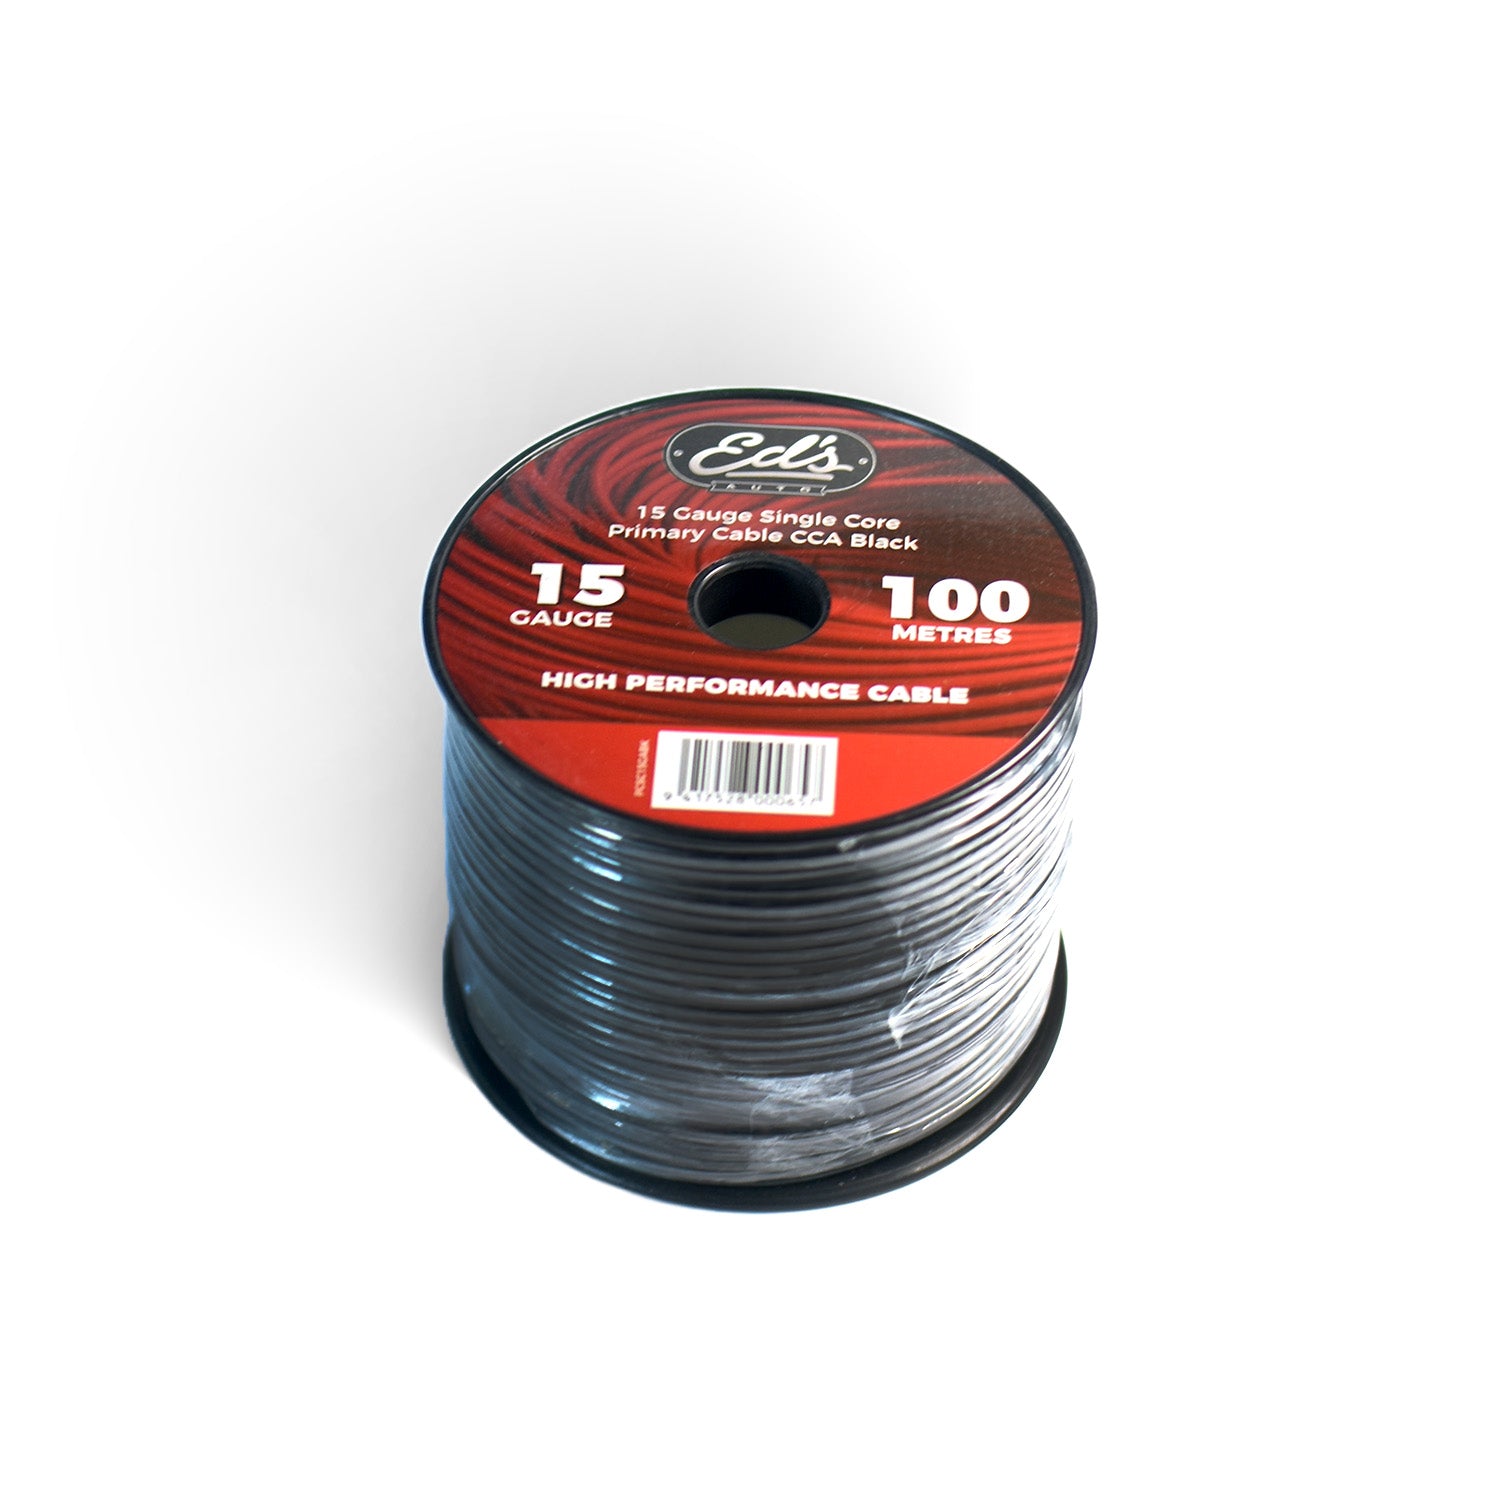 Eds 15 Gauge Single Core Primary Cable Cca 100M Black